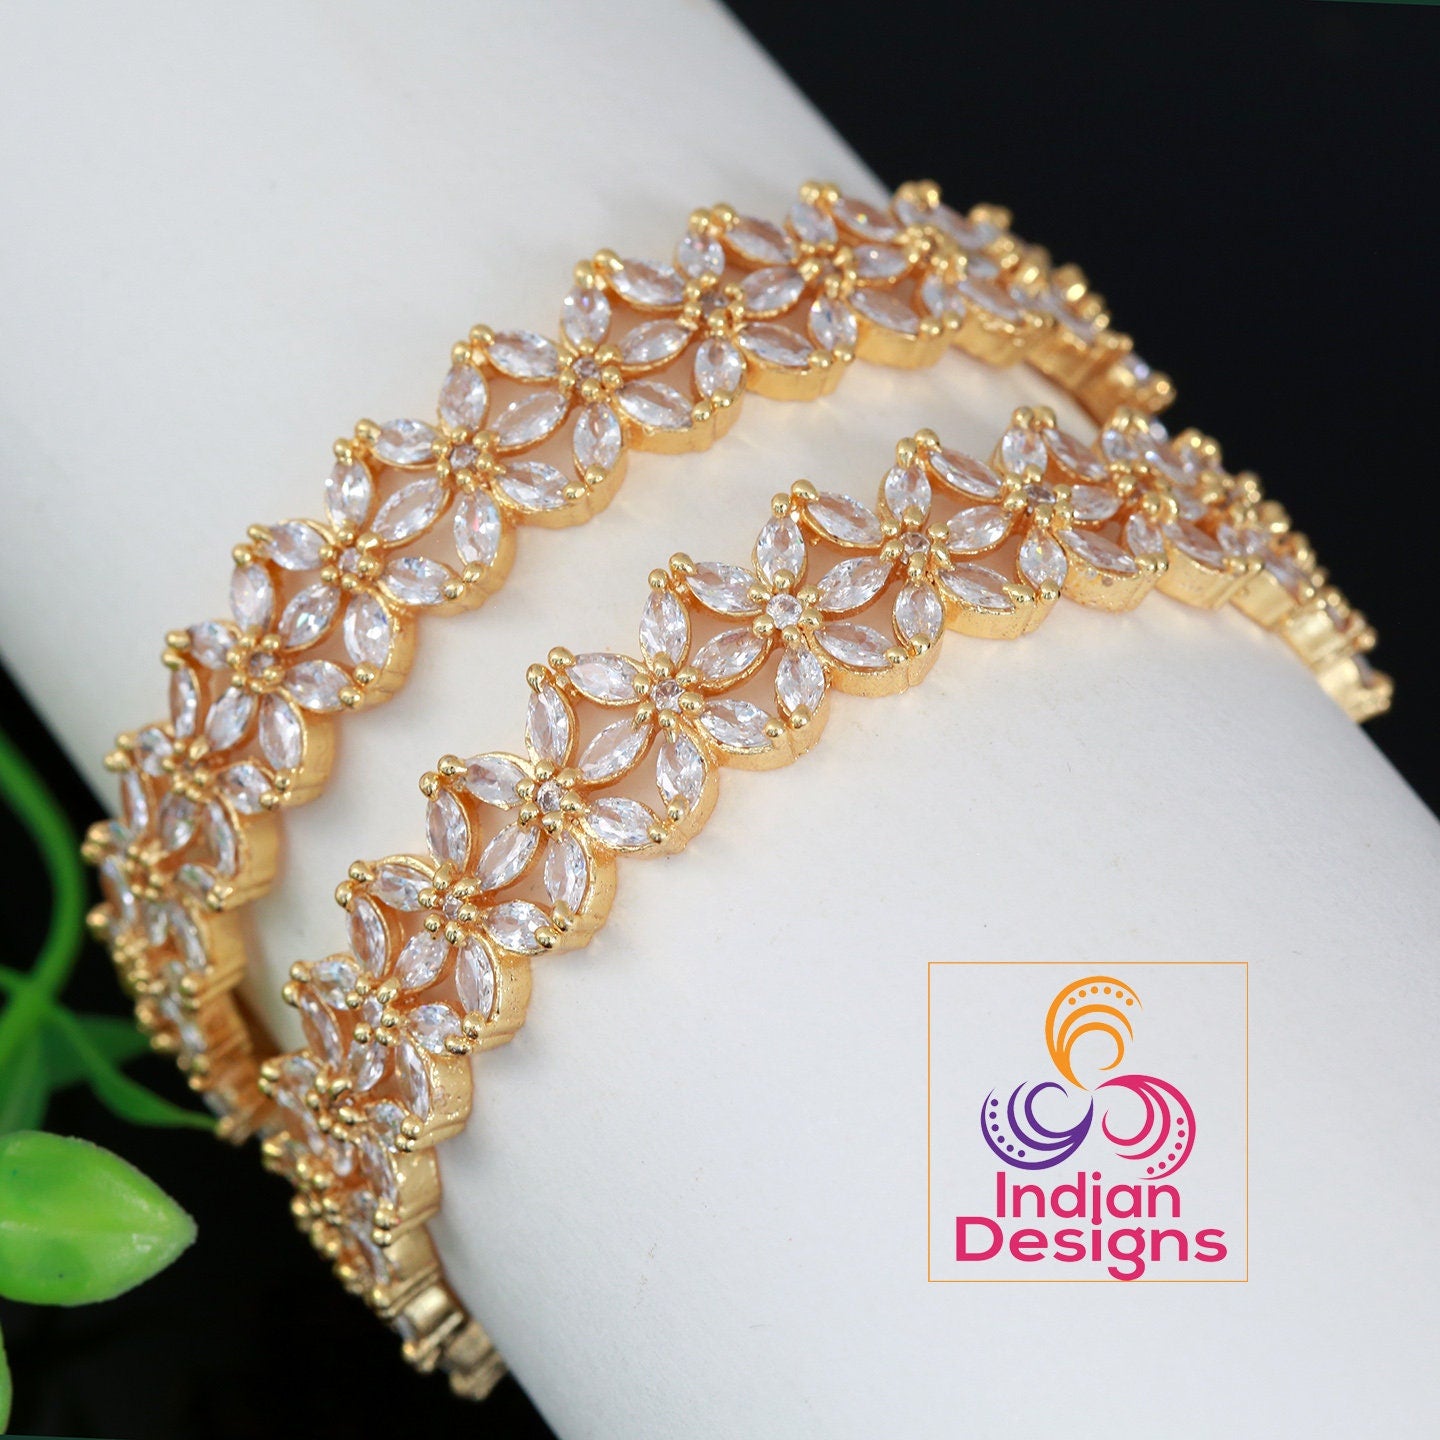 Givenchy Gold Tone Crystal Bangle Bracelet | eBay